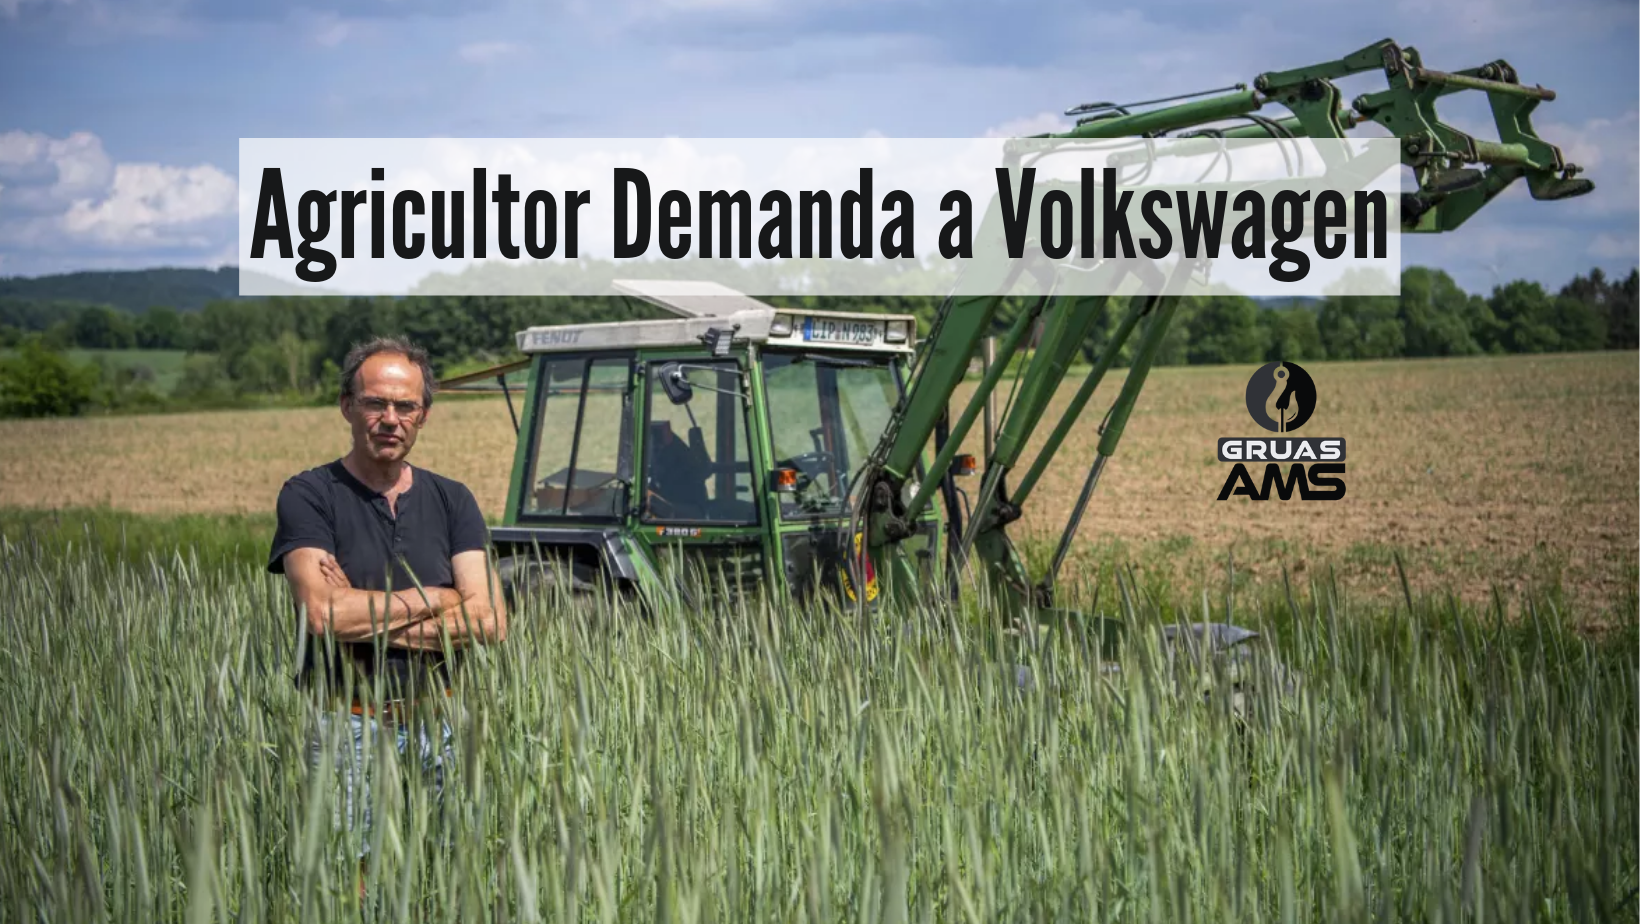 Agricultor demanda a Volkswagen